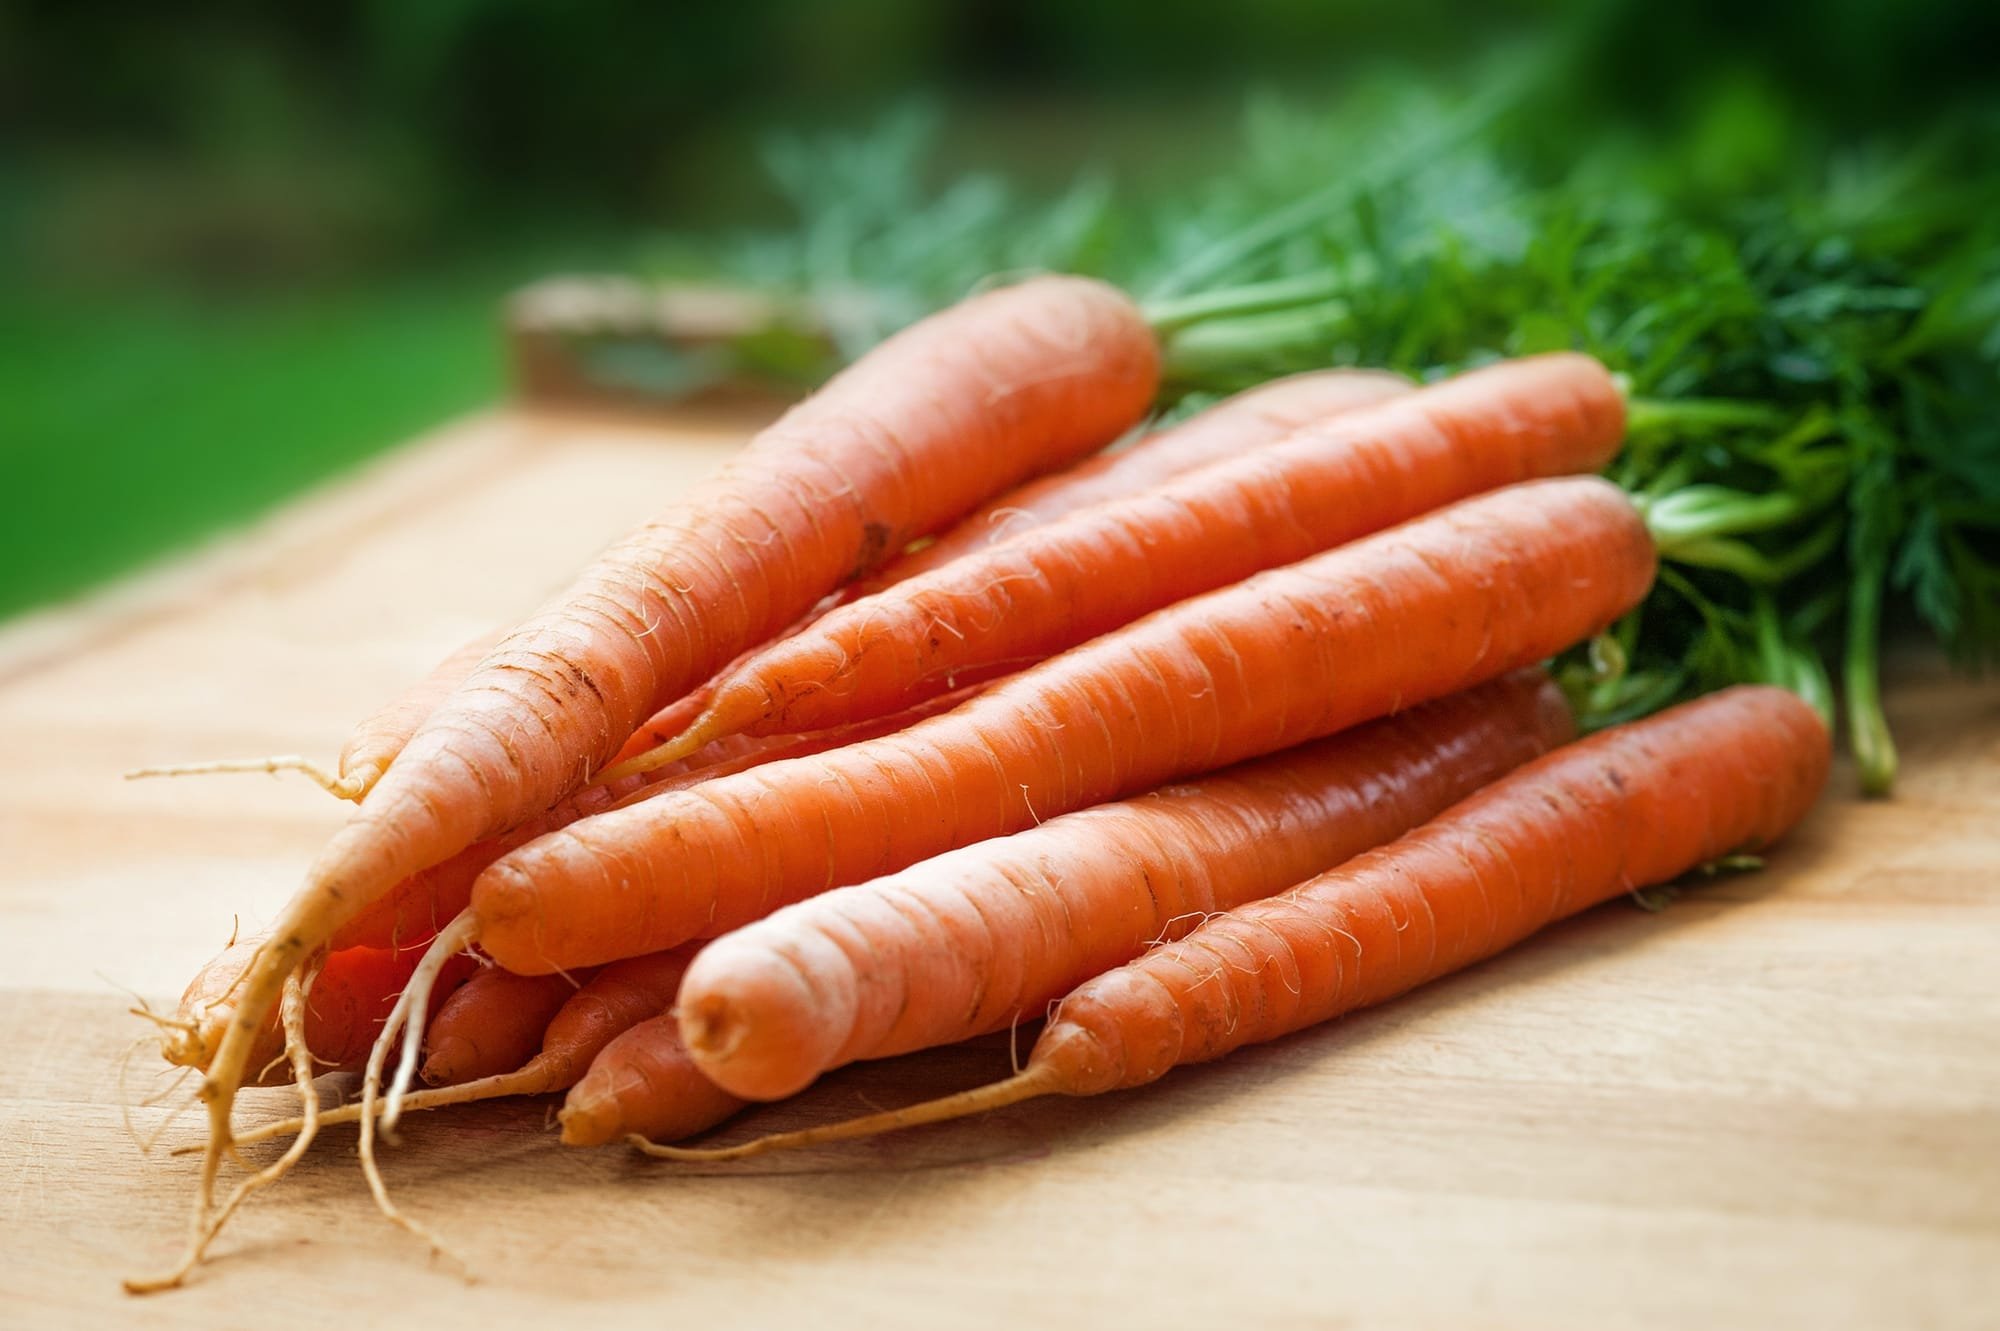 Carrot for health